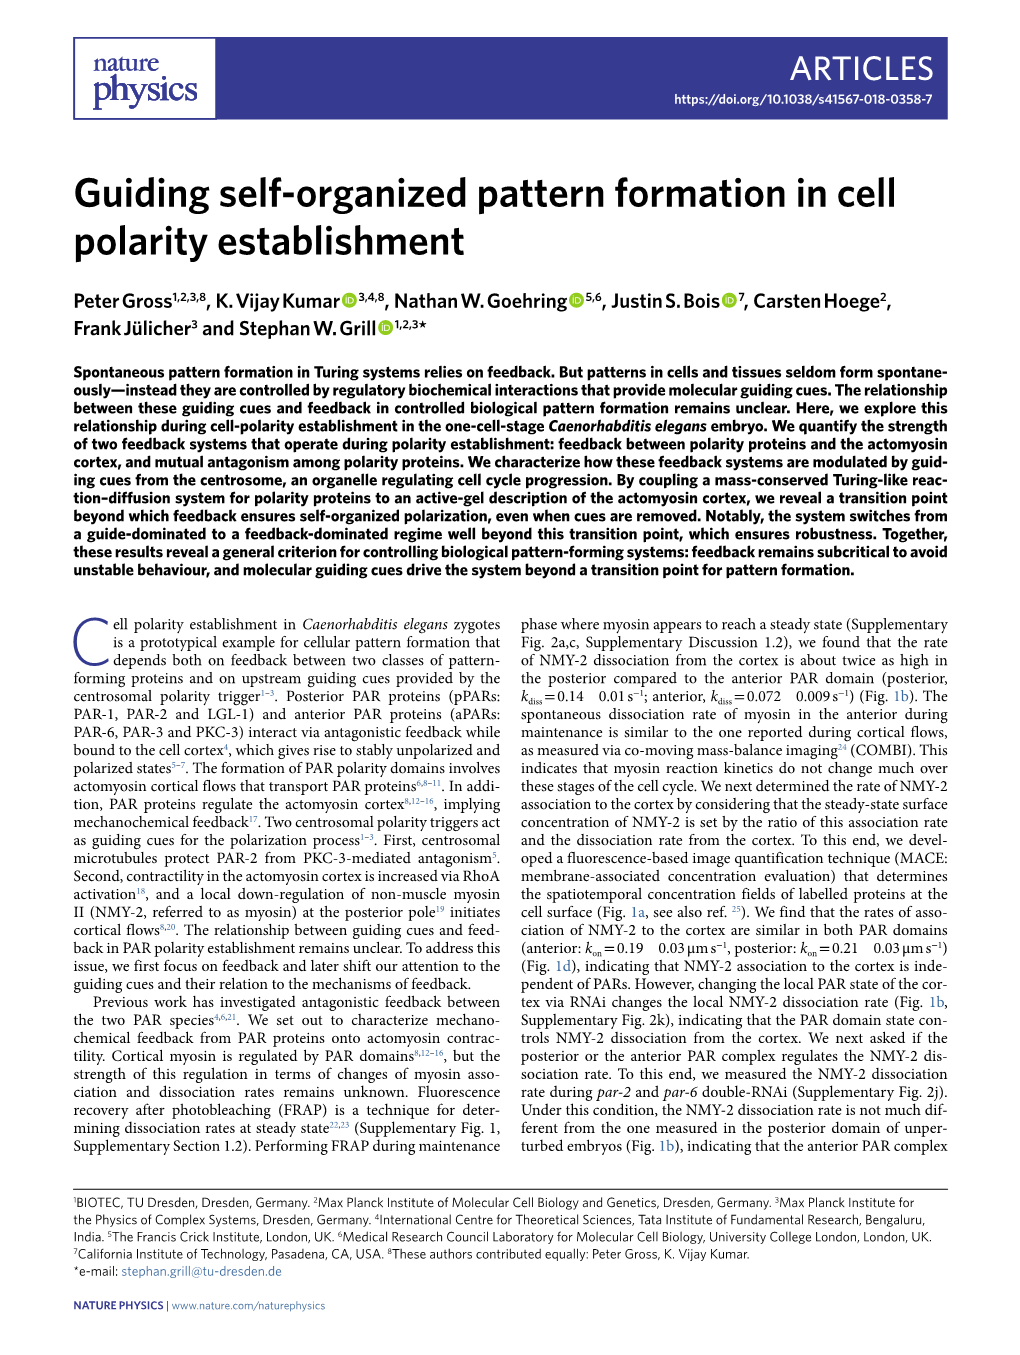 Guiding Self-Organized Pattern Formation in Cell Polarity Establishment